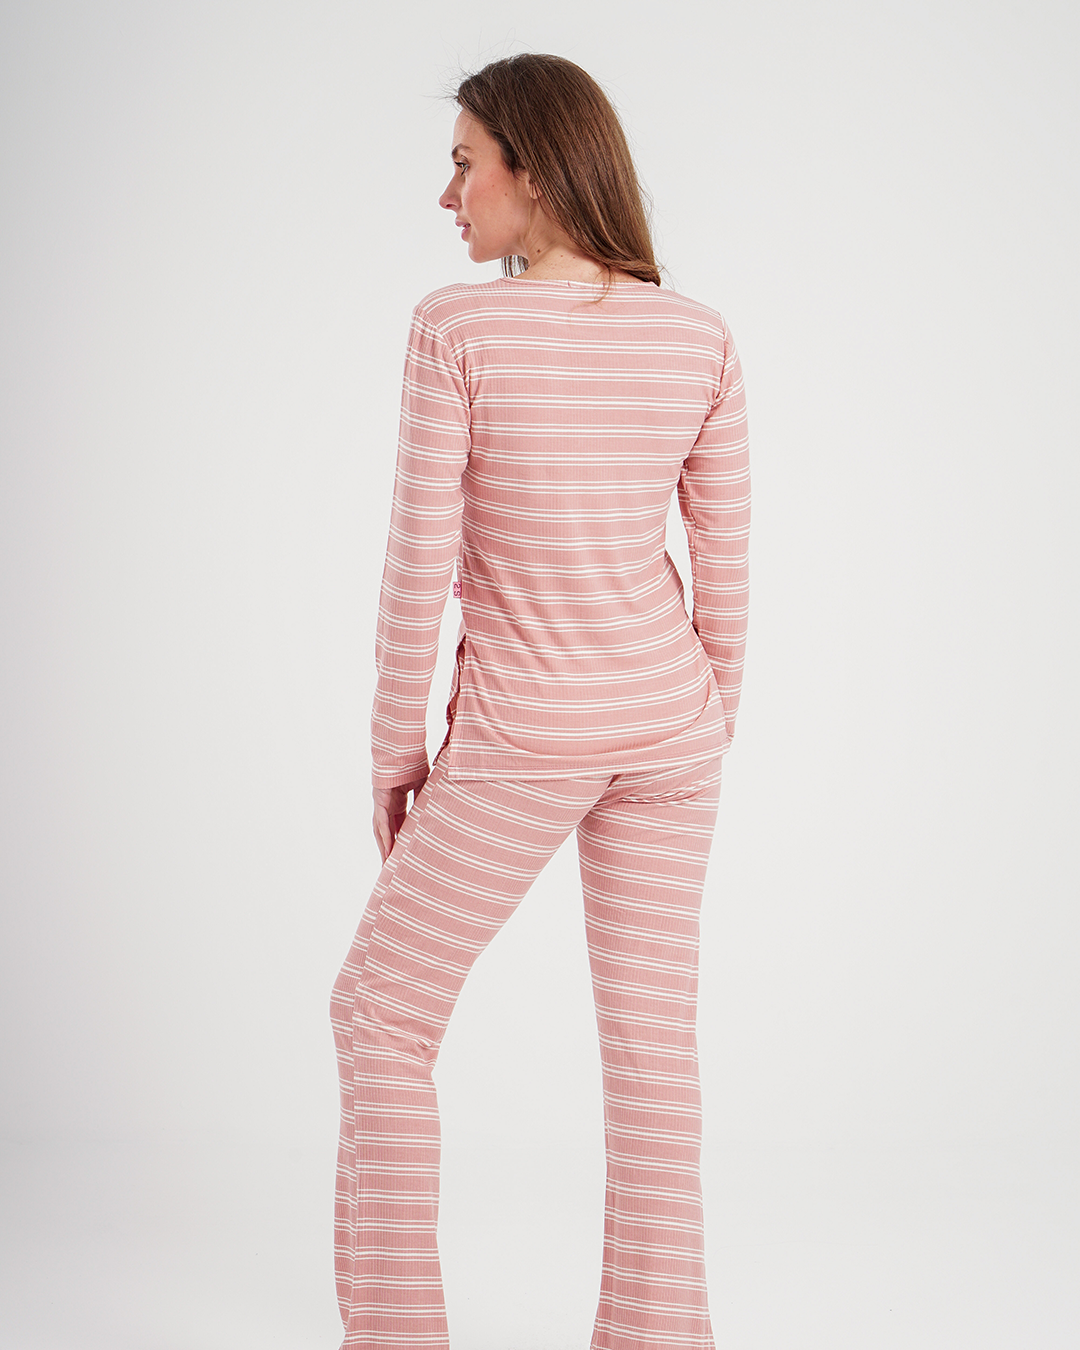 Striped Women's Pajama Pants